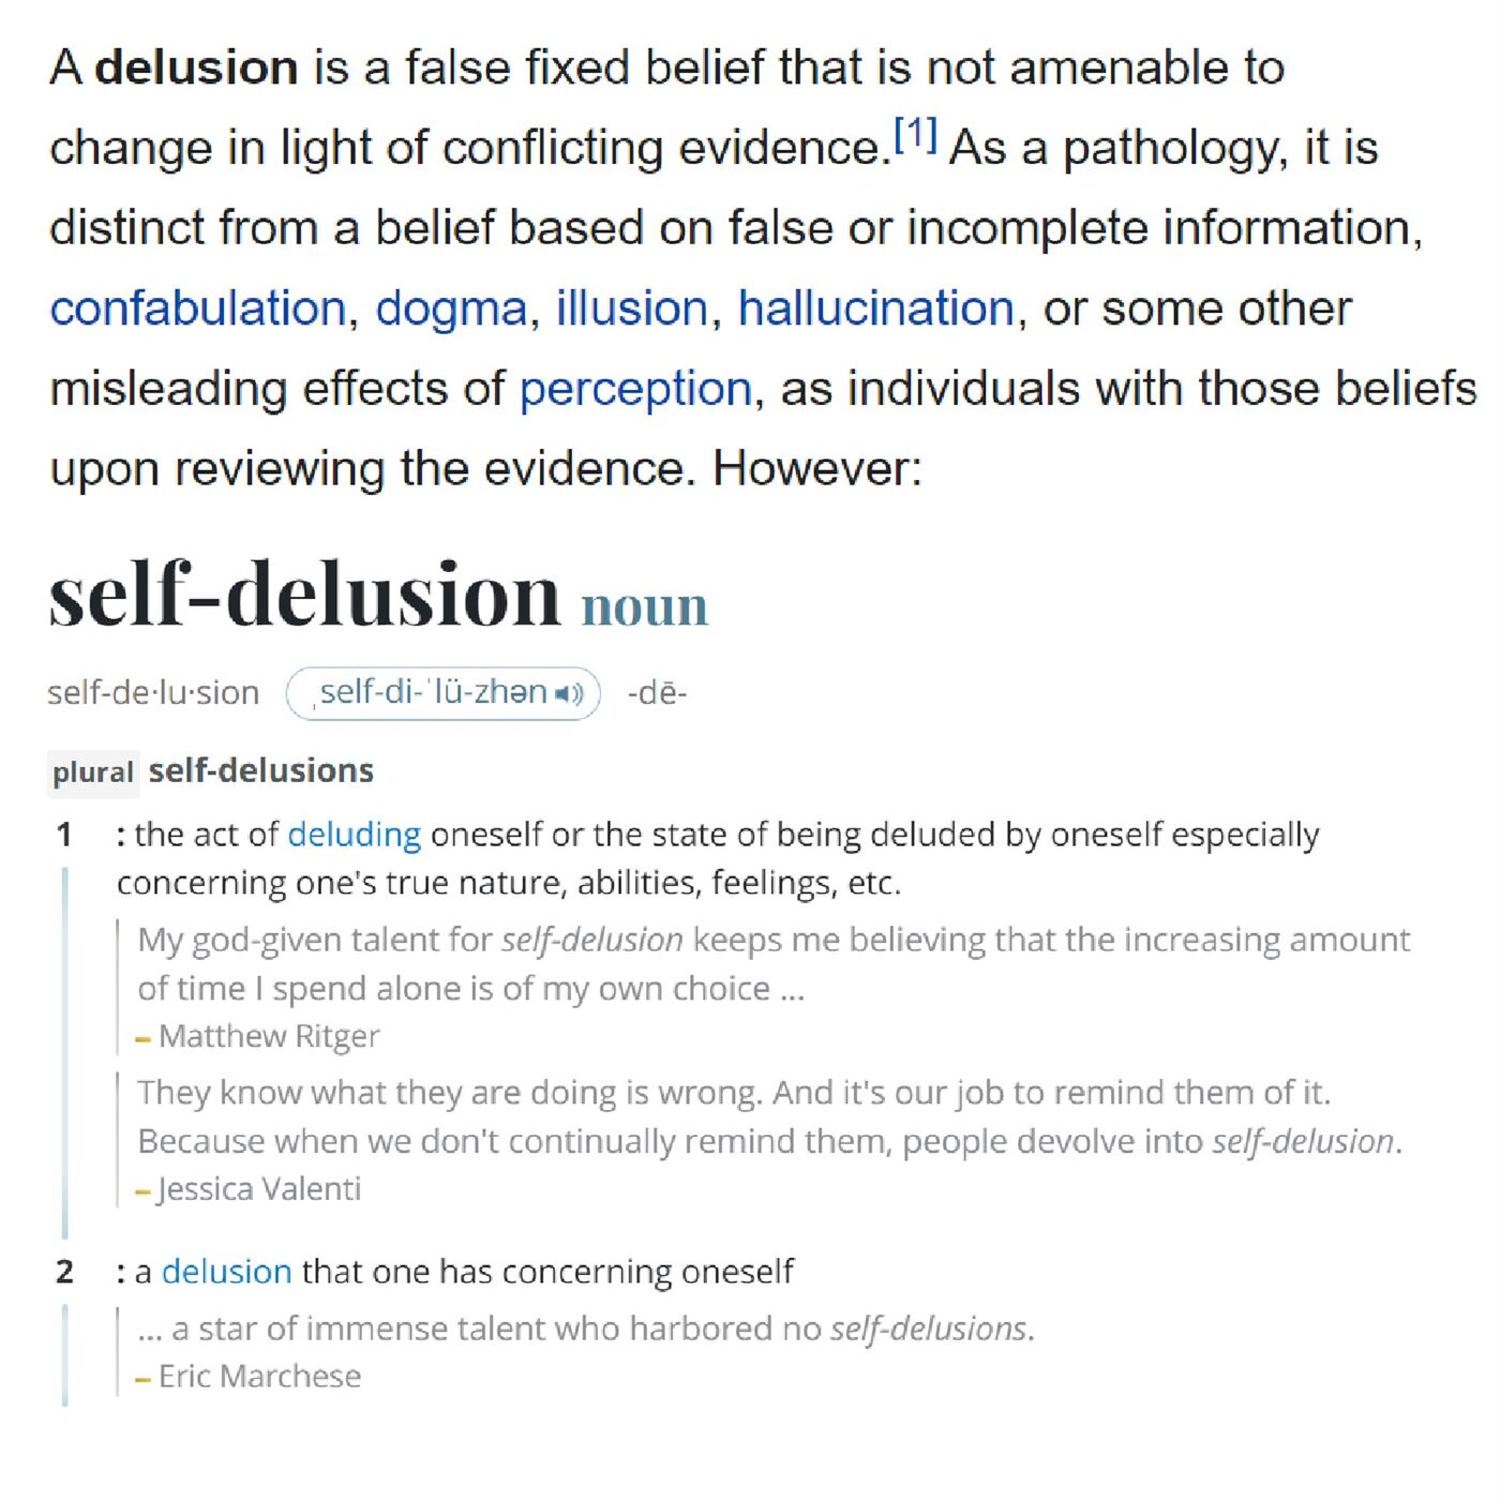 Definition